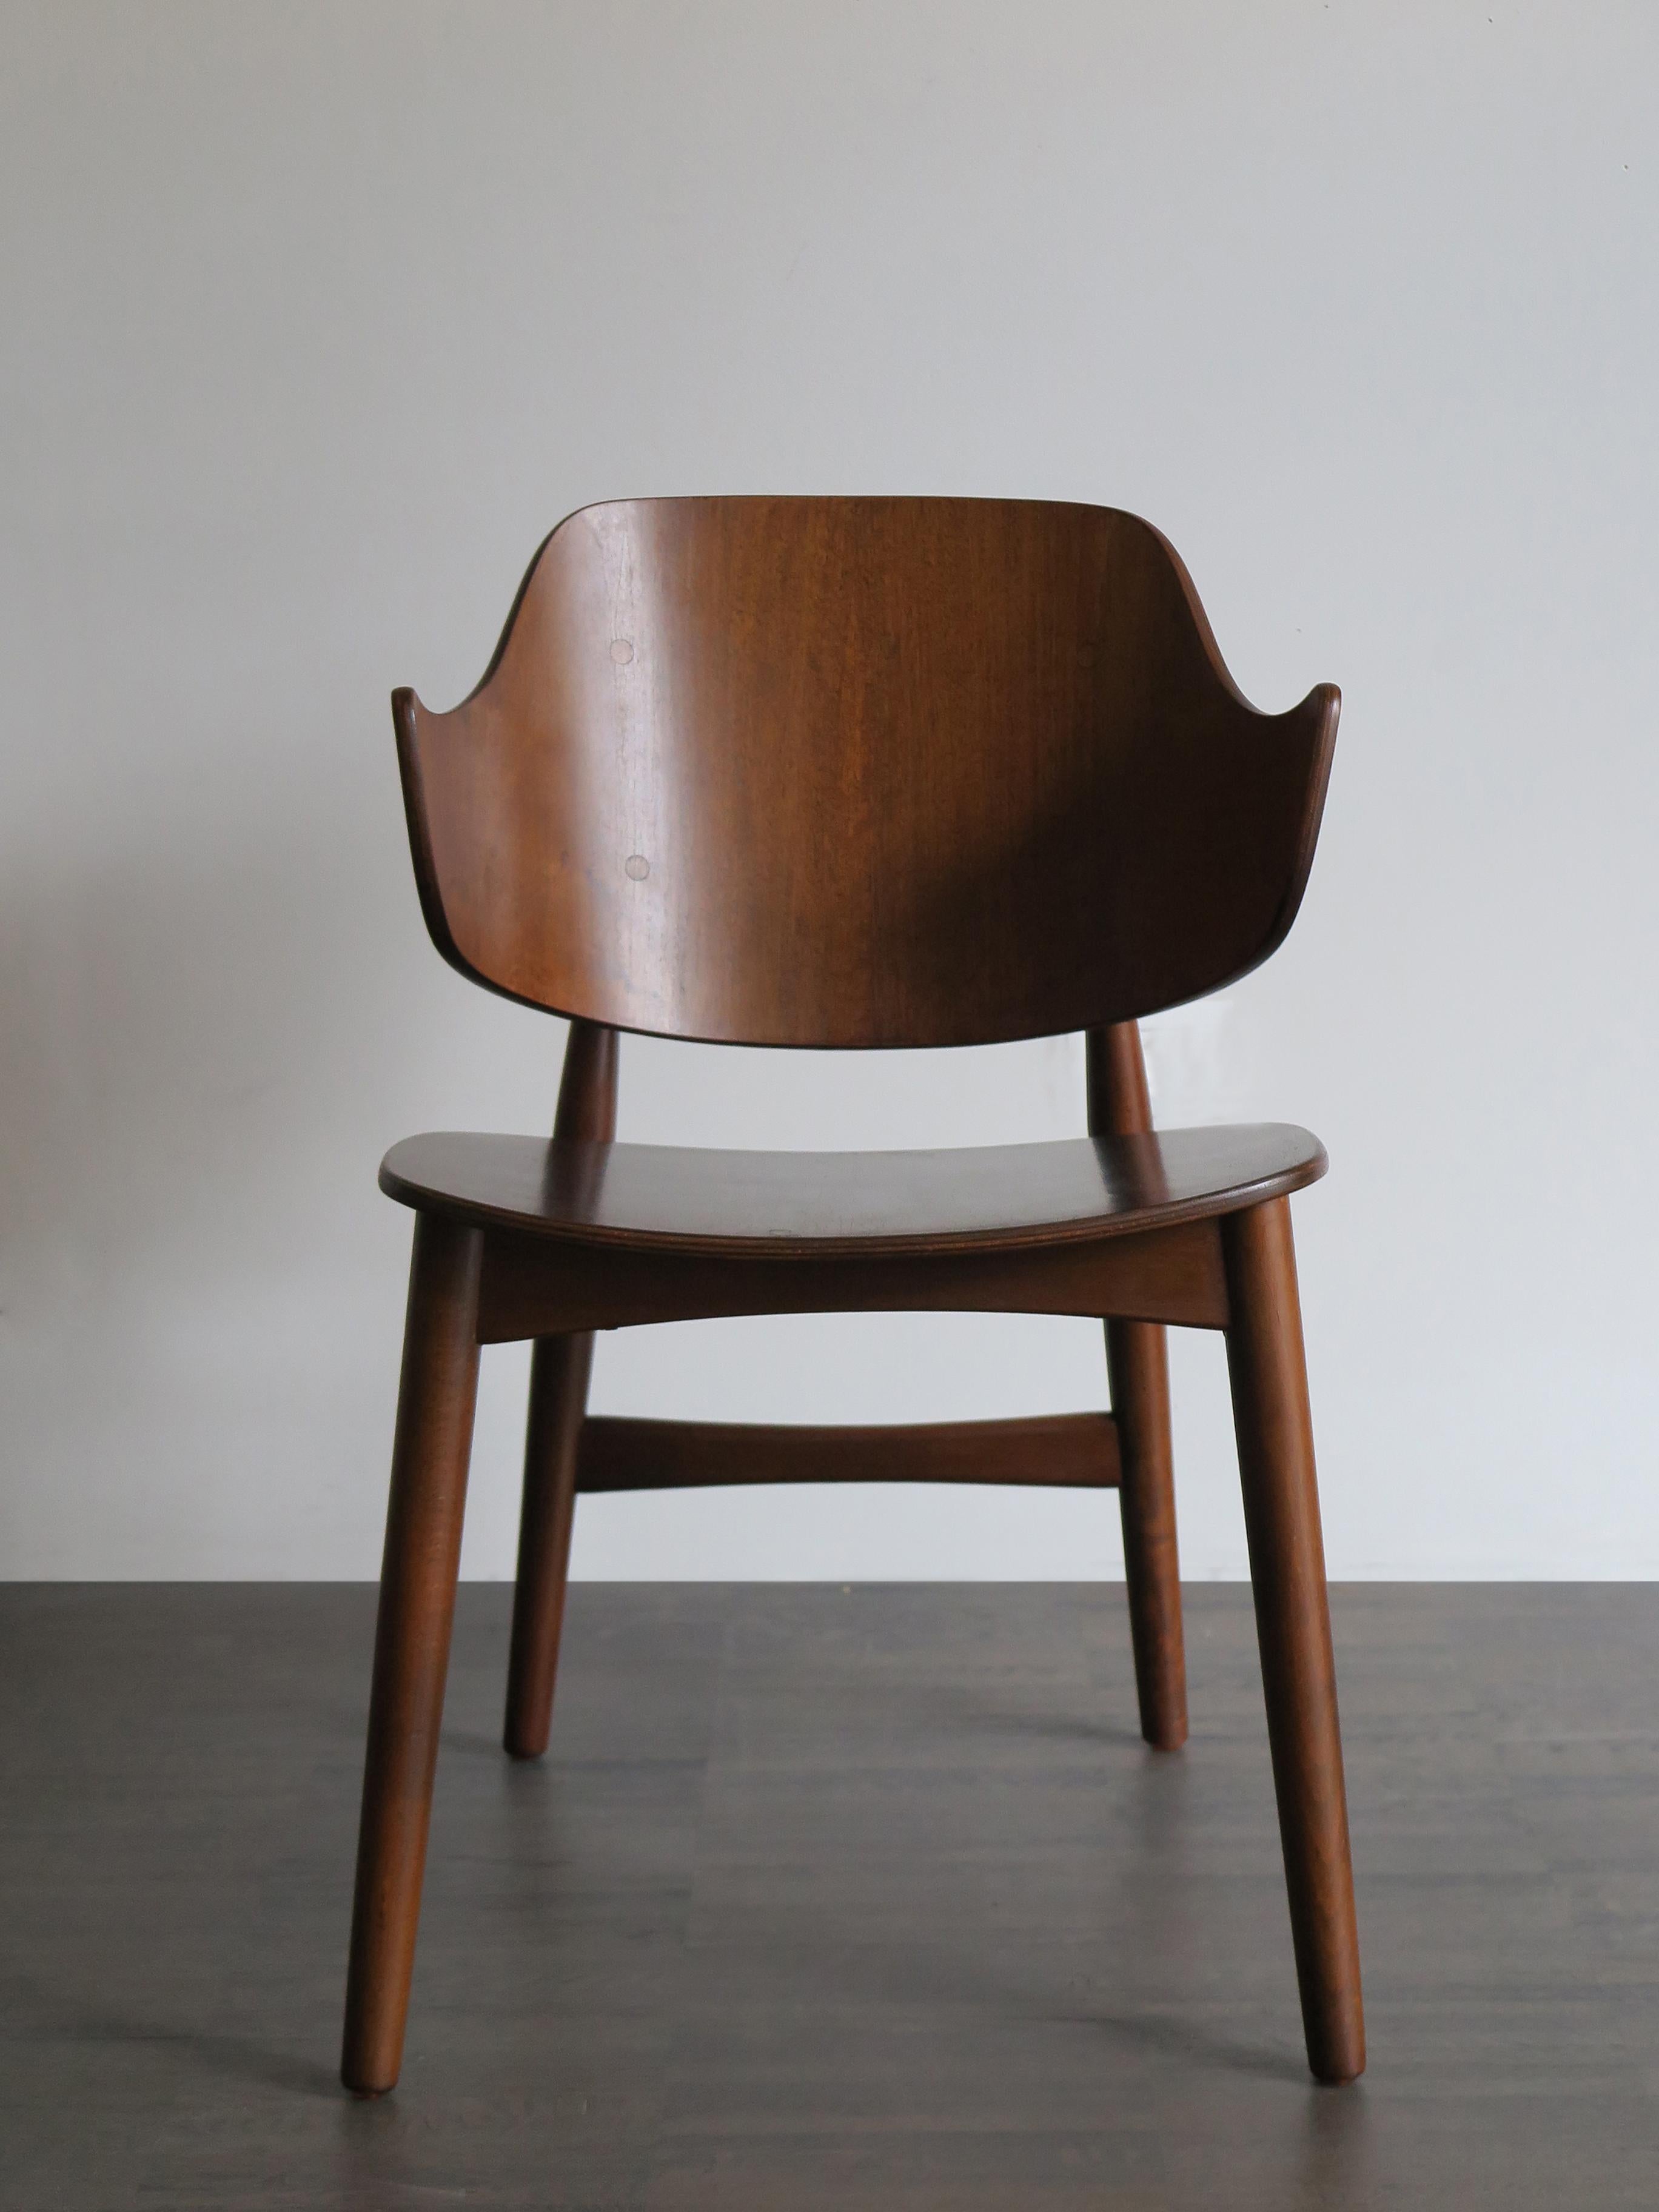 Scandinavian Modern Jens Hjorth Scandinavian Midcentury Modern Wood Chairs Armchairs, 1950s